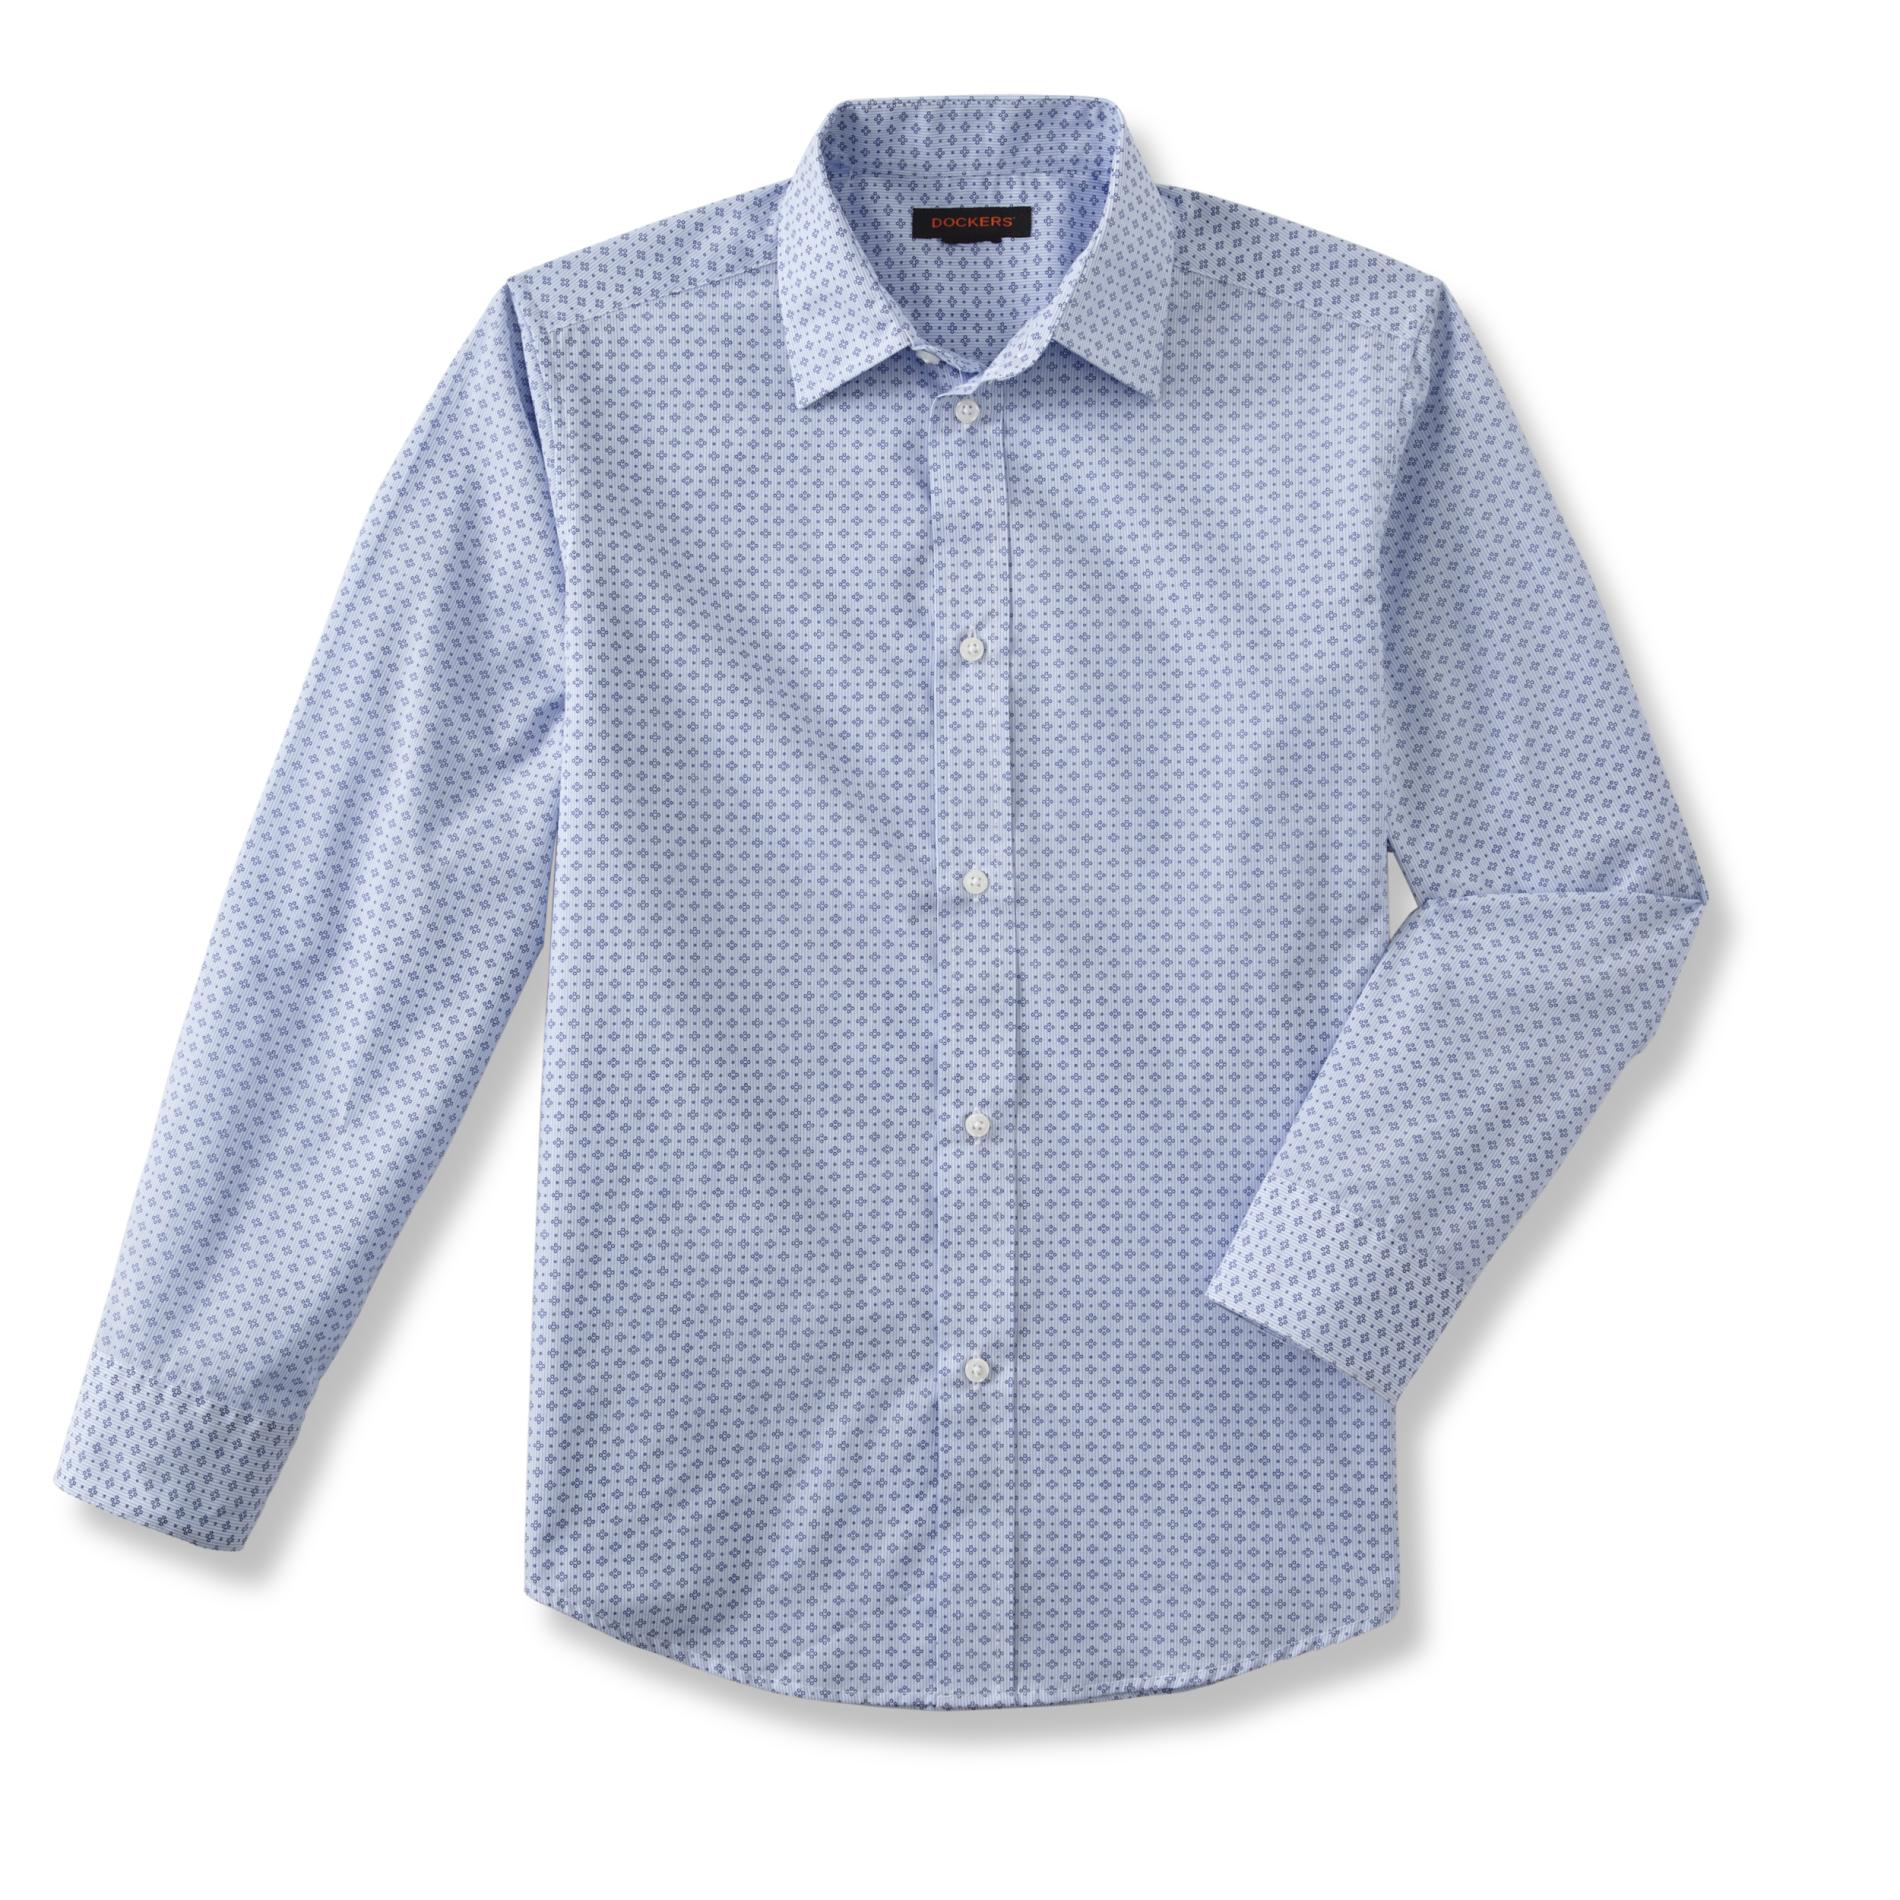 Dockers Boys' Button-Front Shirt - Striped & Diamond Dots